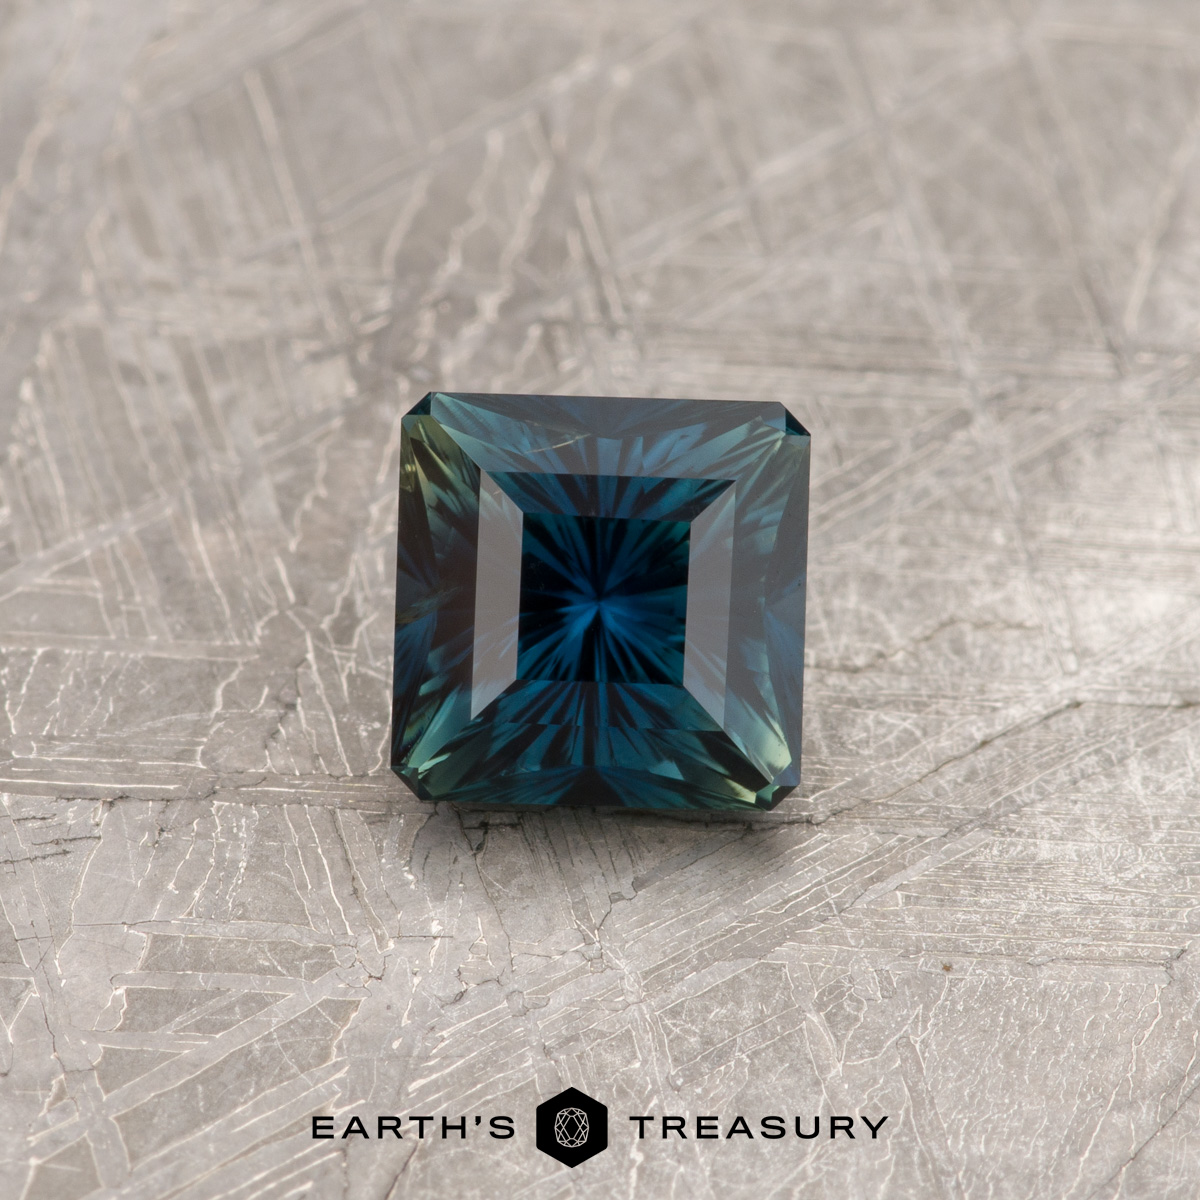 A blue-green square Nigerian sapphire